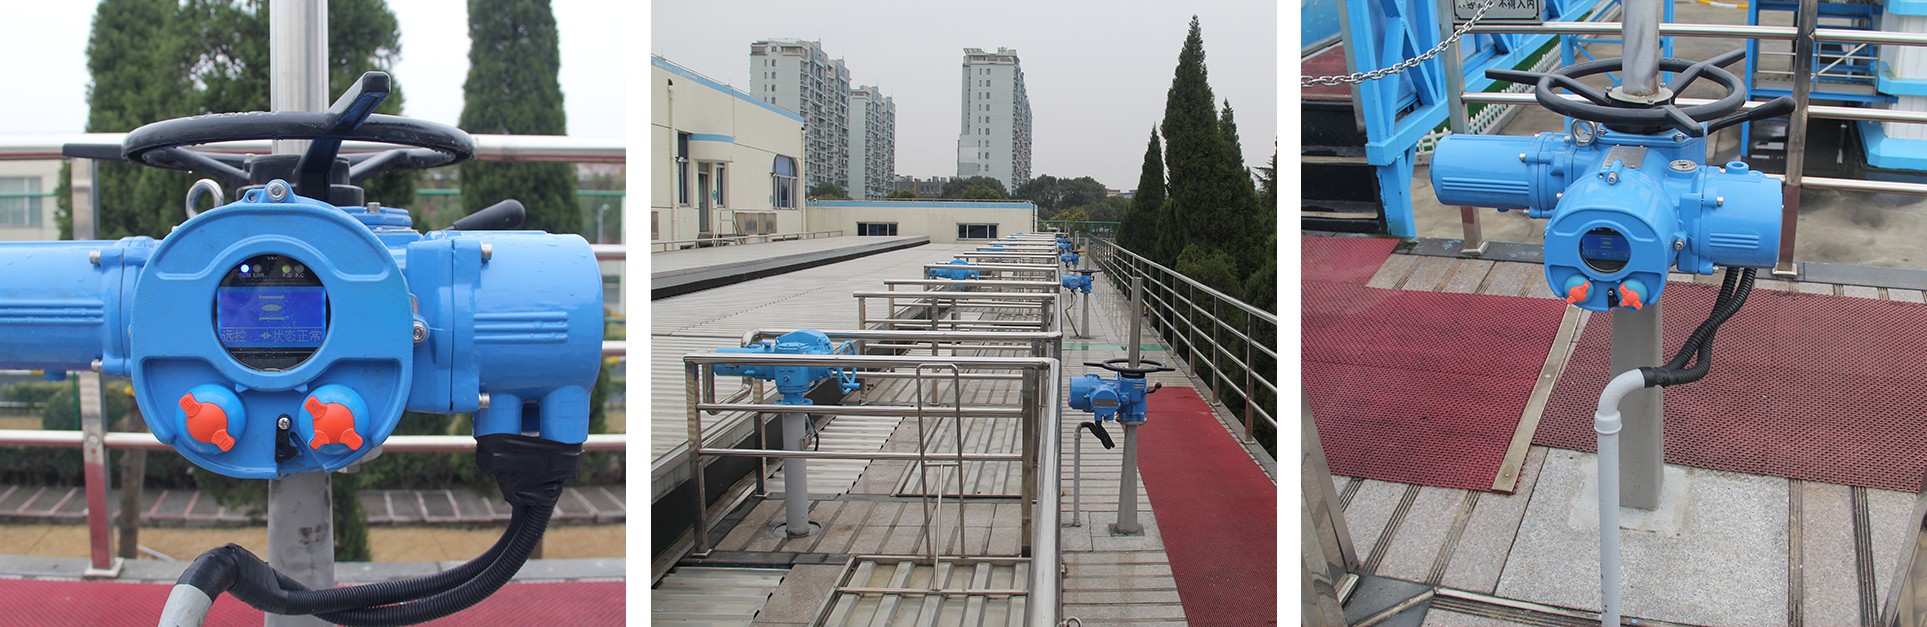 Songjiang Water Works